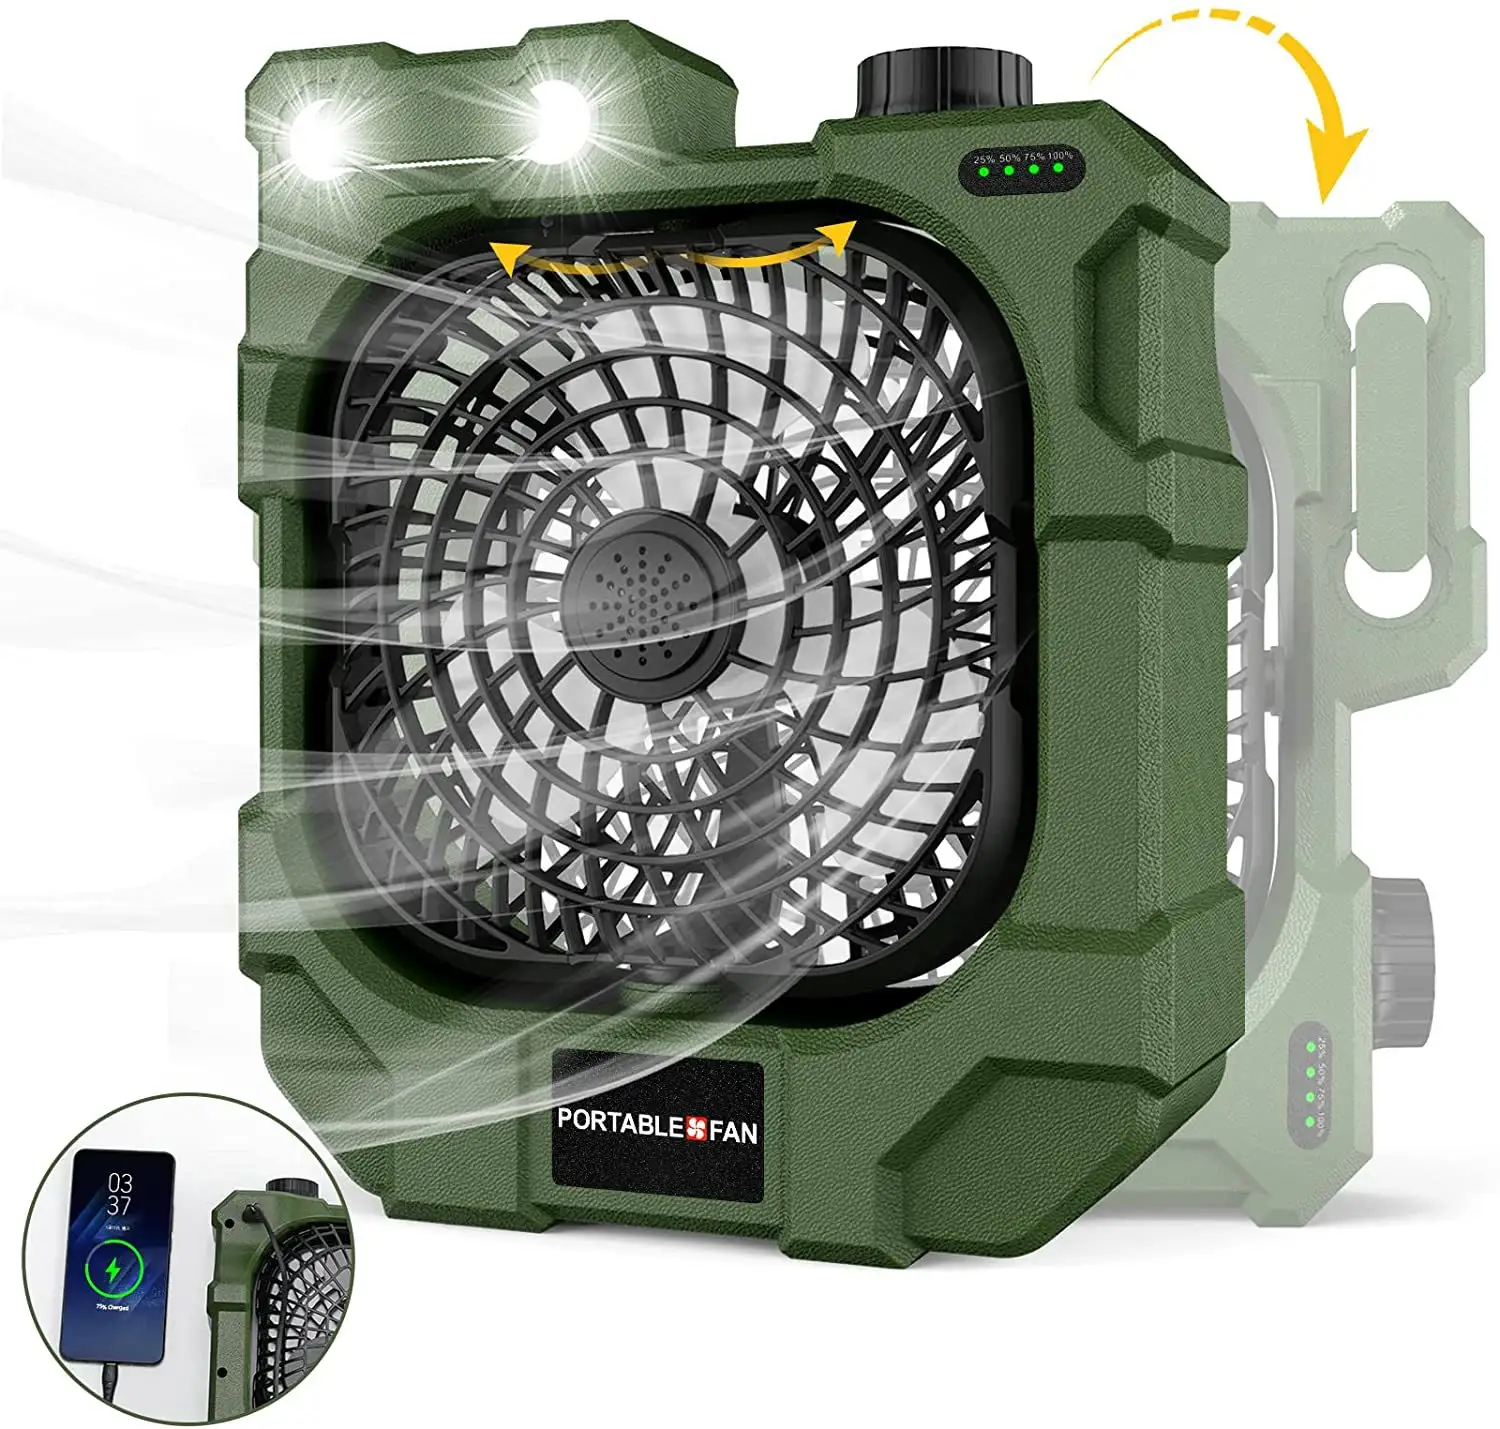 270 Grad Drehung Tragbarer geräuscharmer Außen ventilator mit LED-Licht 10400 mAh USB-Ladezelt-Decken ventilator Camping ventilator